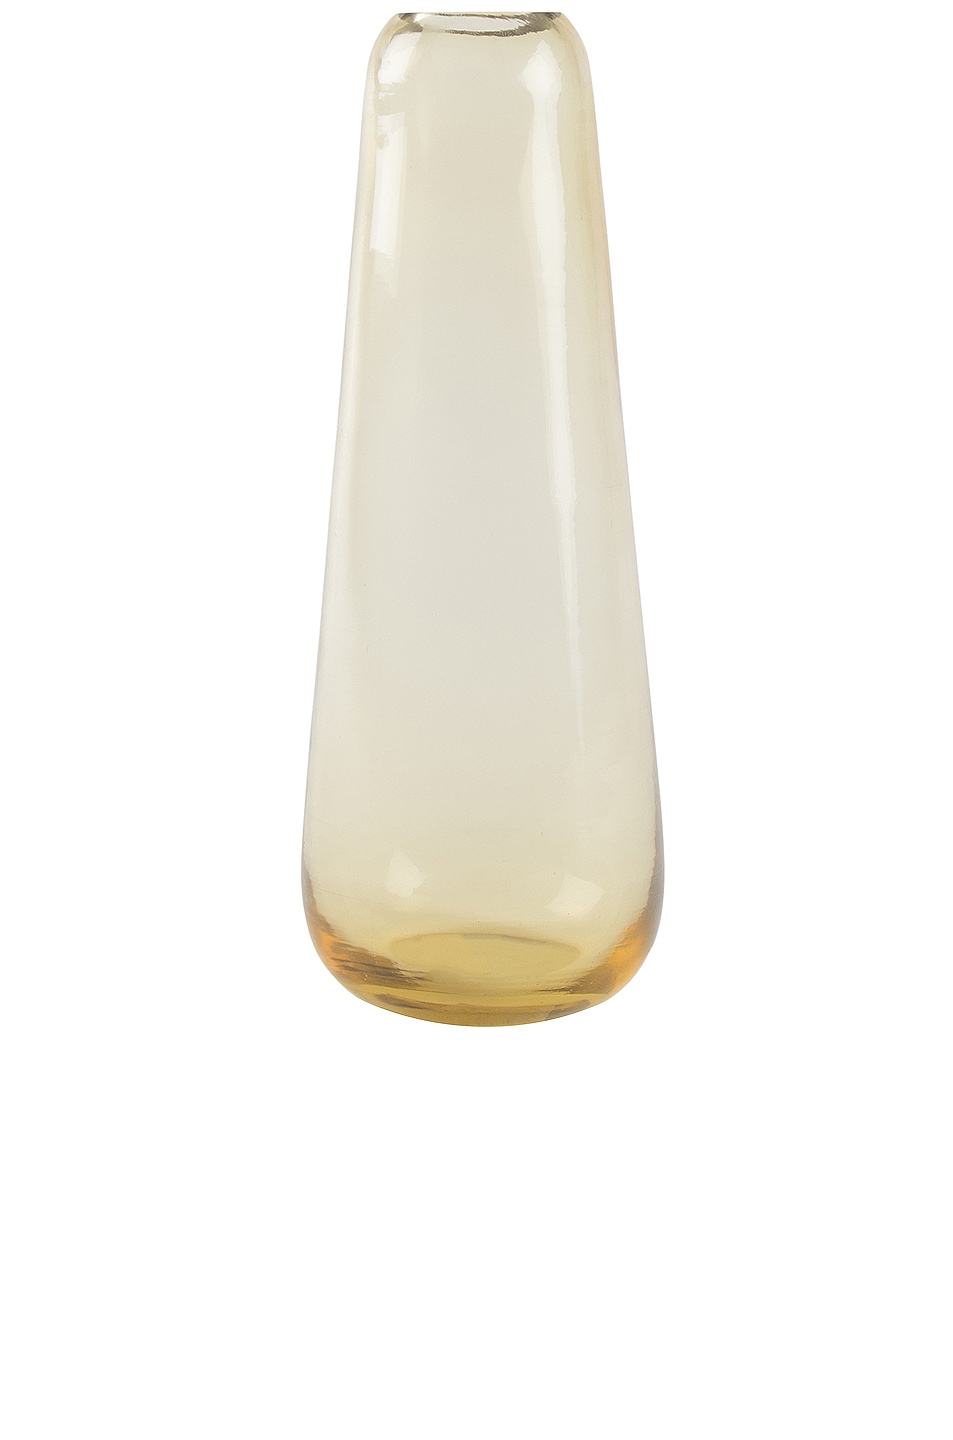 Image 1 of HAWKINS NEW YORK Aurora Small Pill Vase in Amber